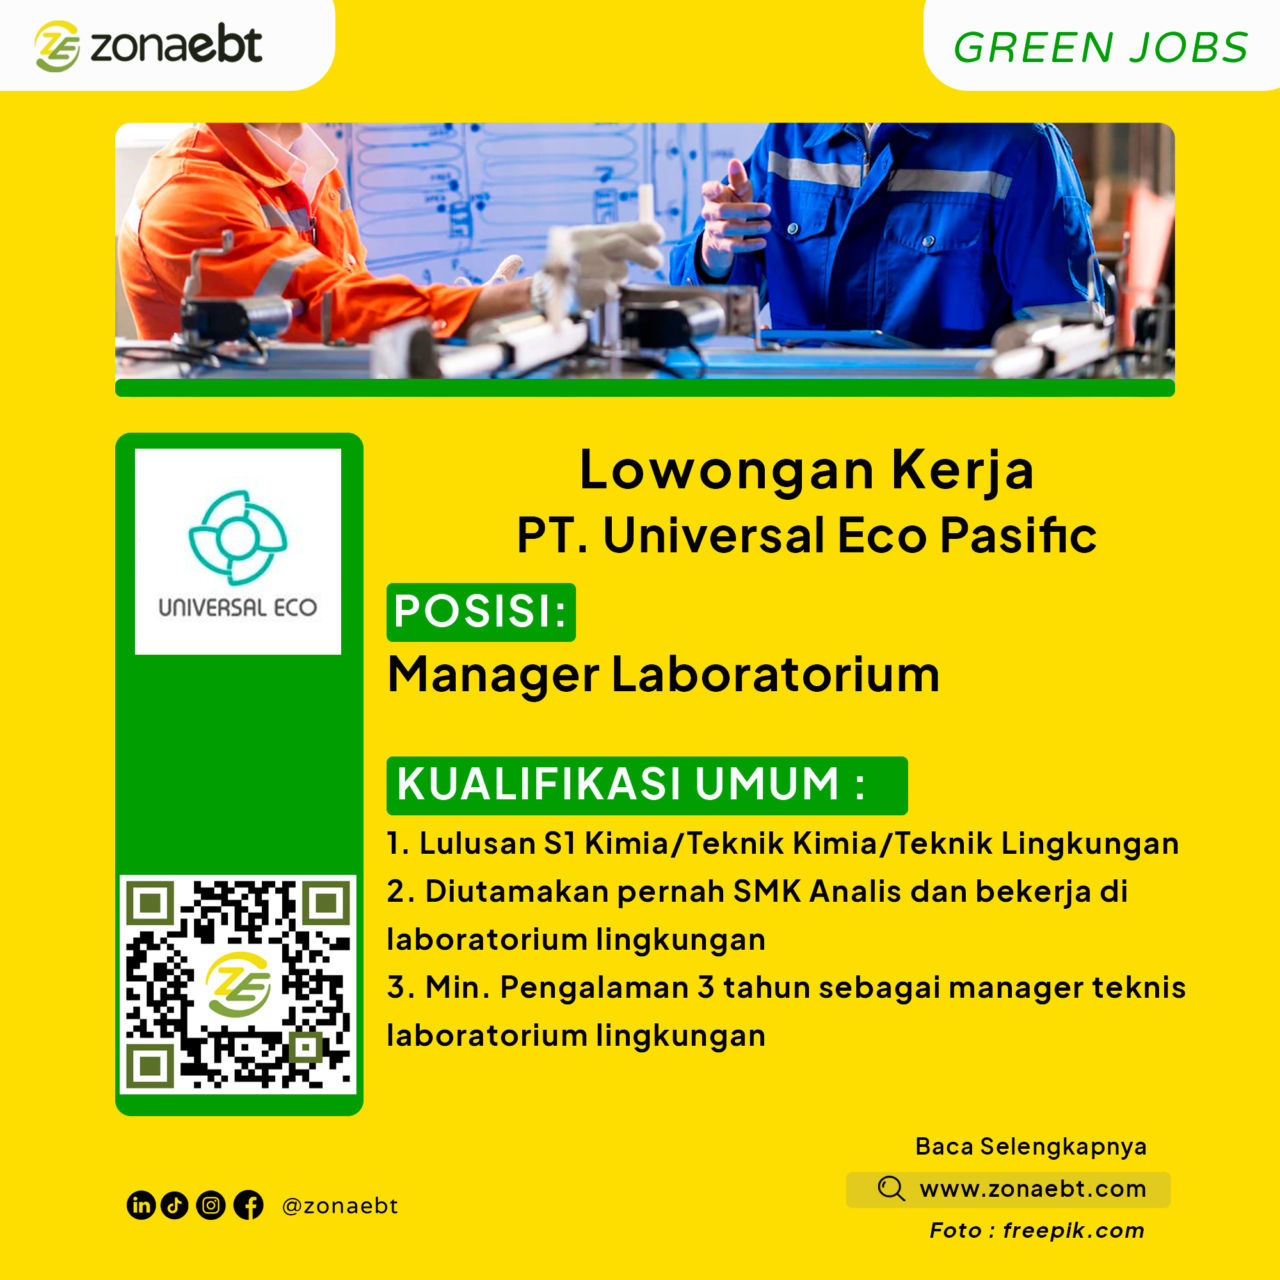 Green Jobs zonaebt.com